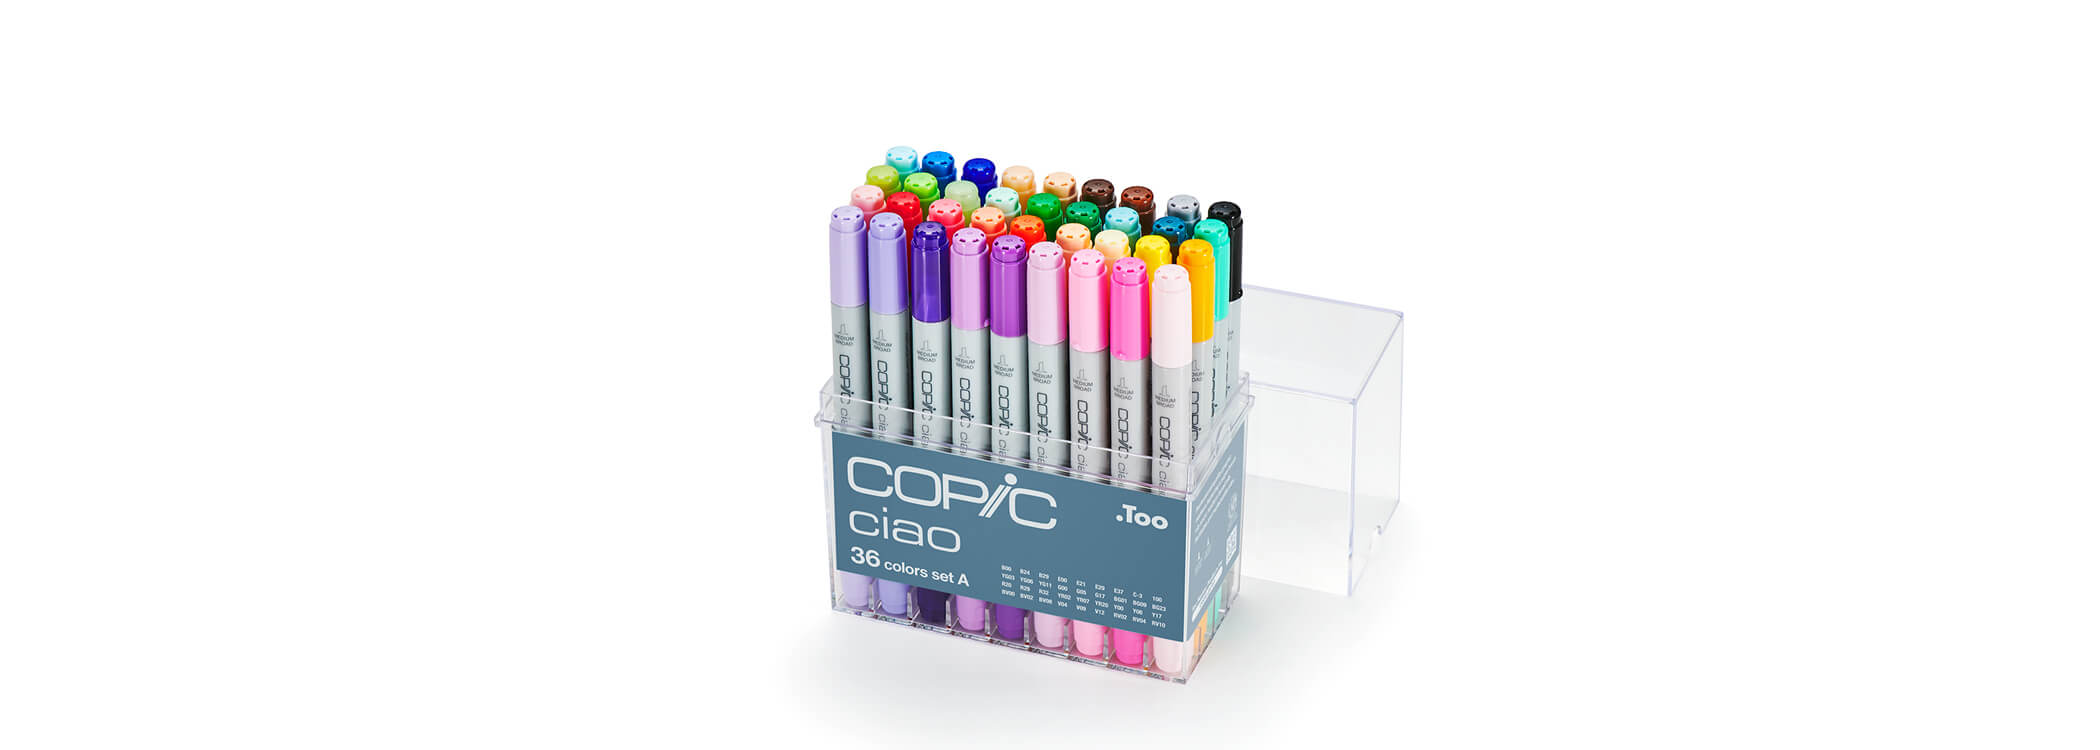 Copic Ciao 36 colors set A - COPIC Official Website